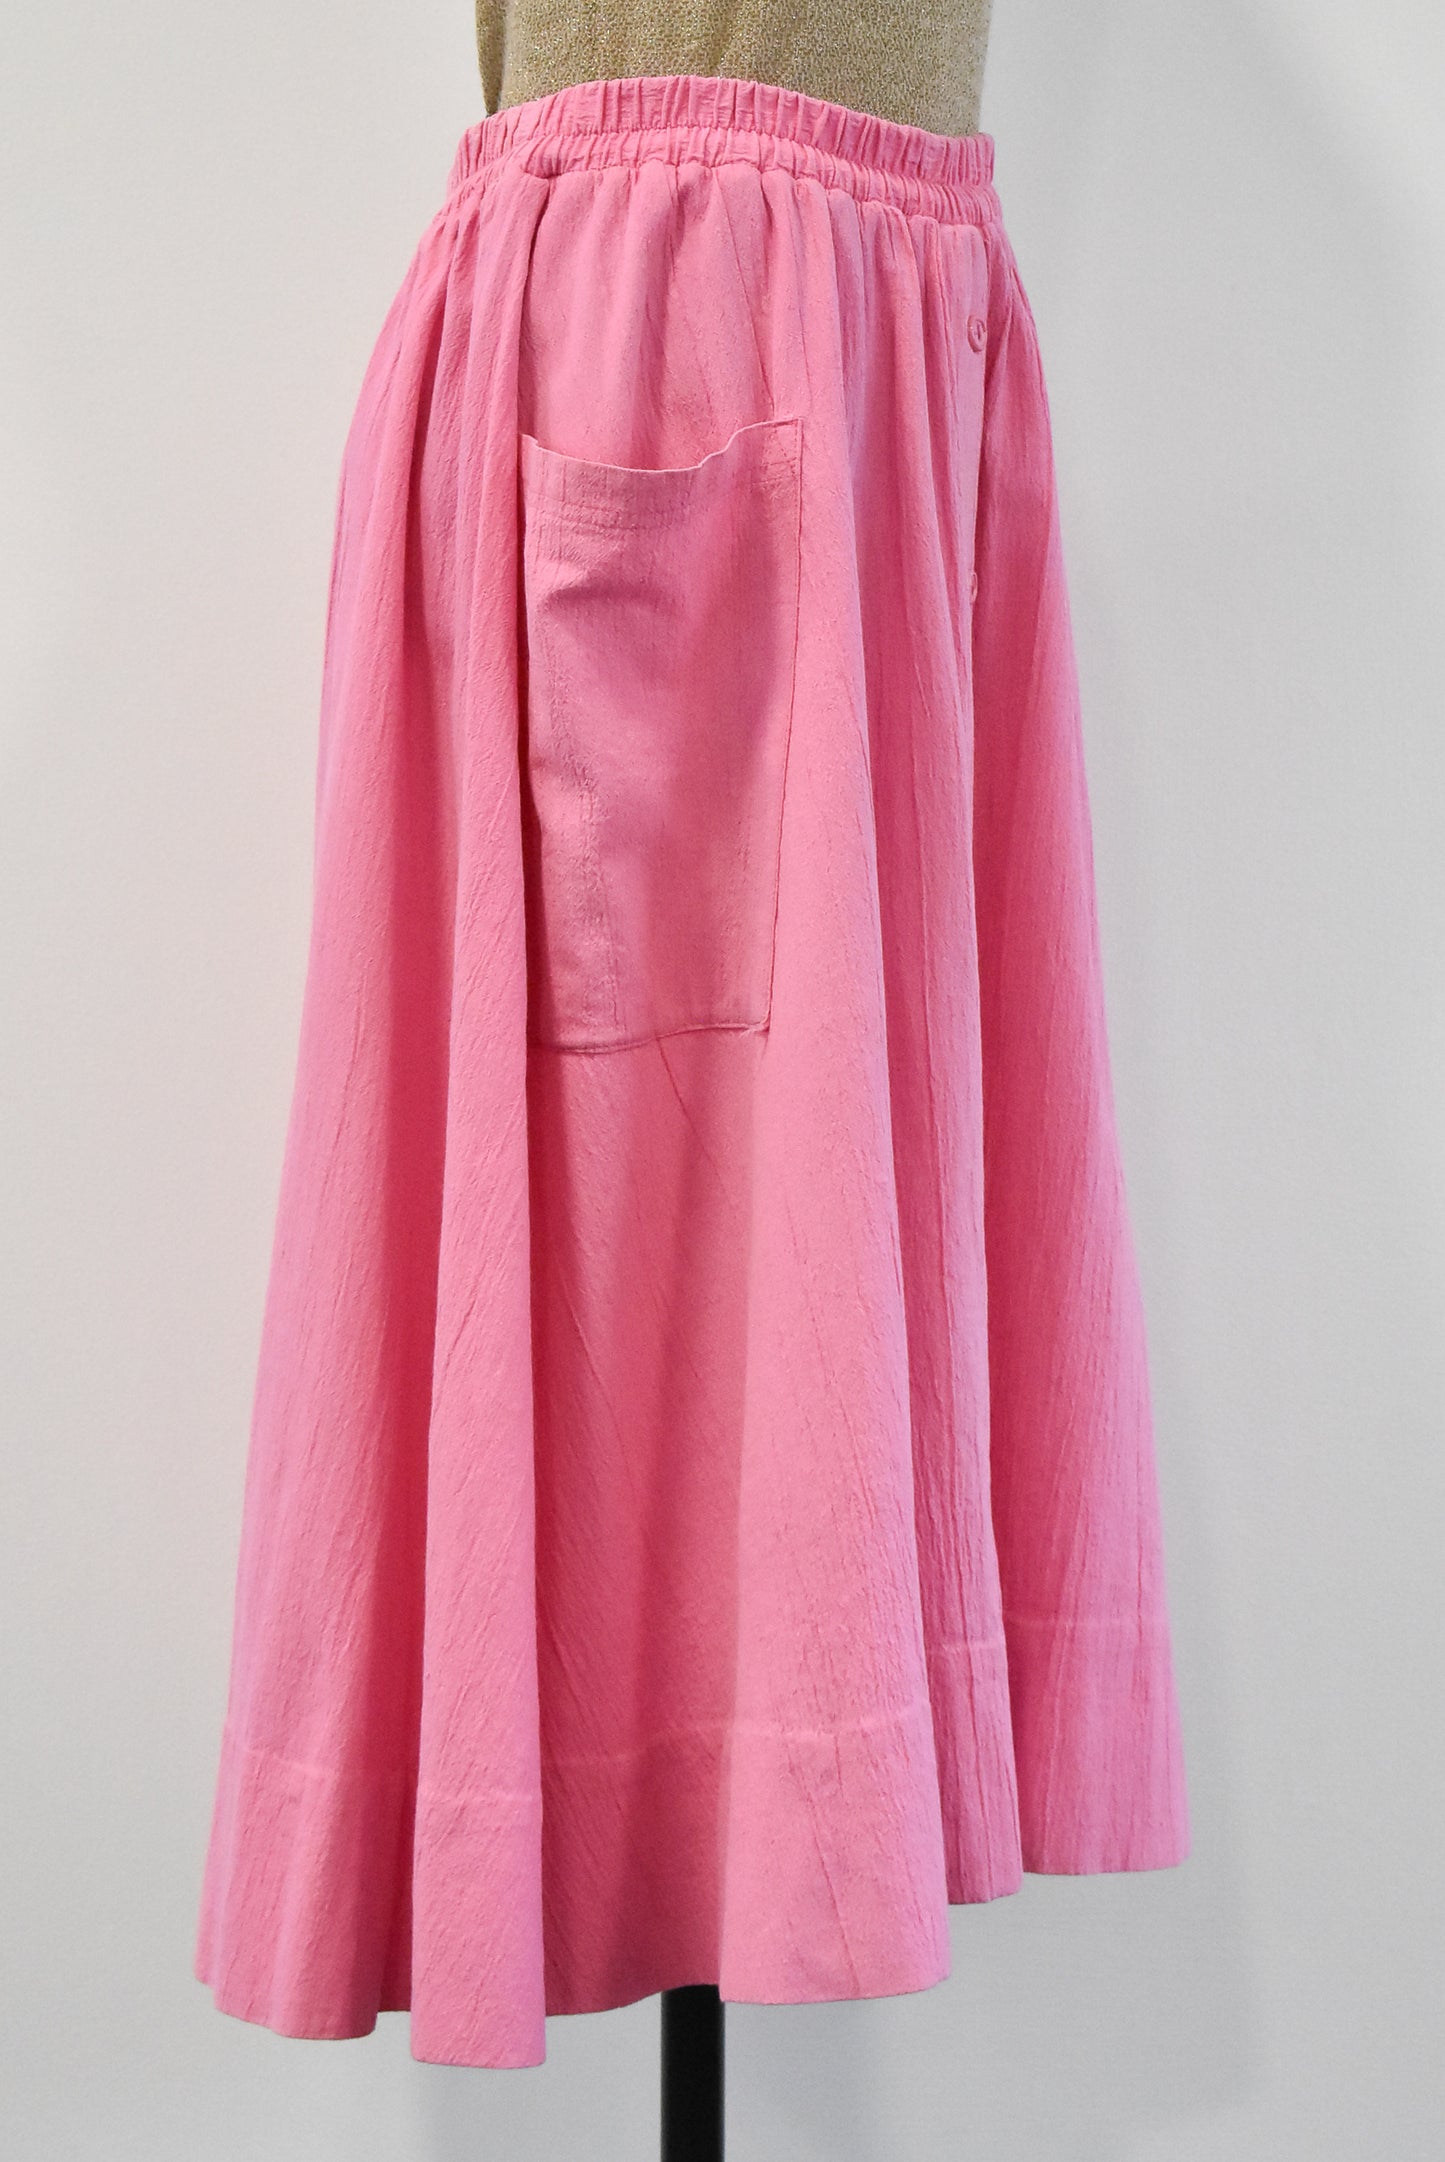 Retro bubblegum pink skirt (made in NZ), 18 (L)